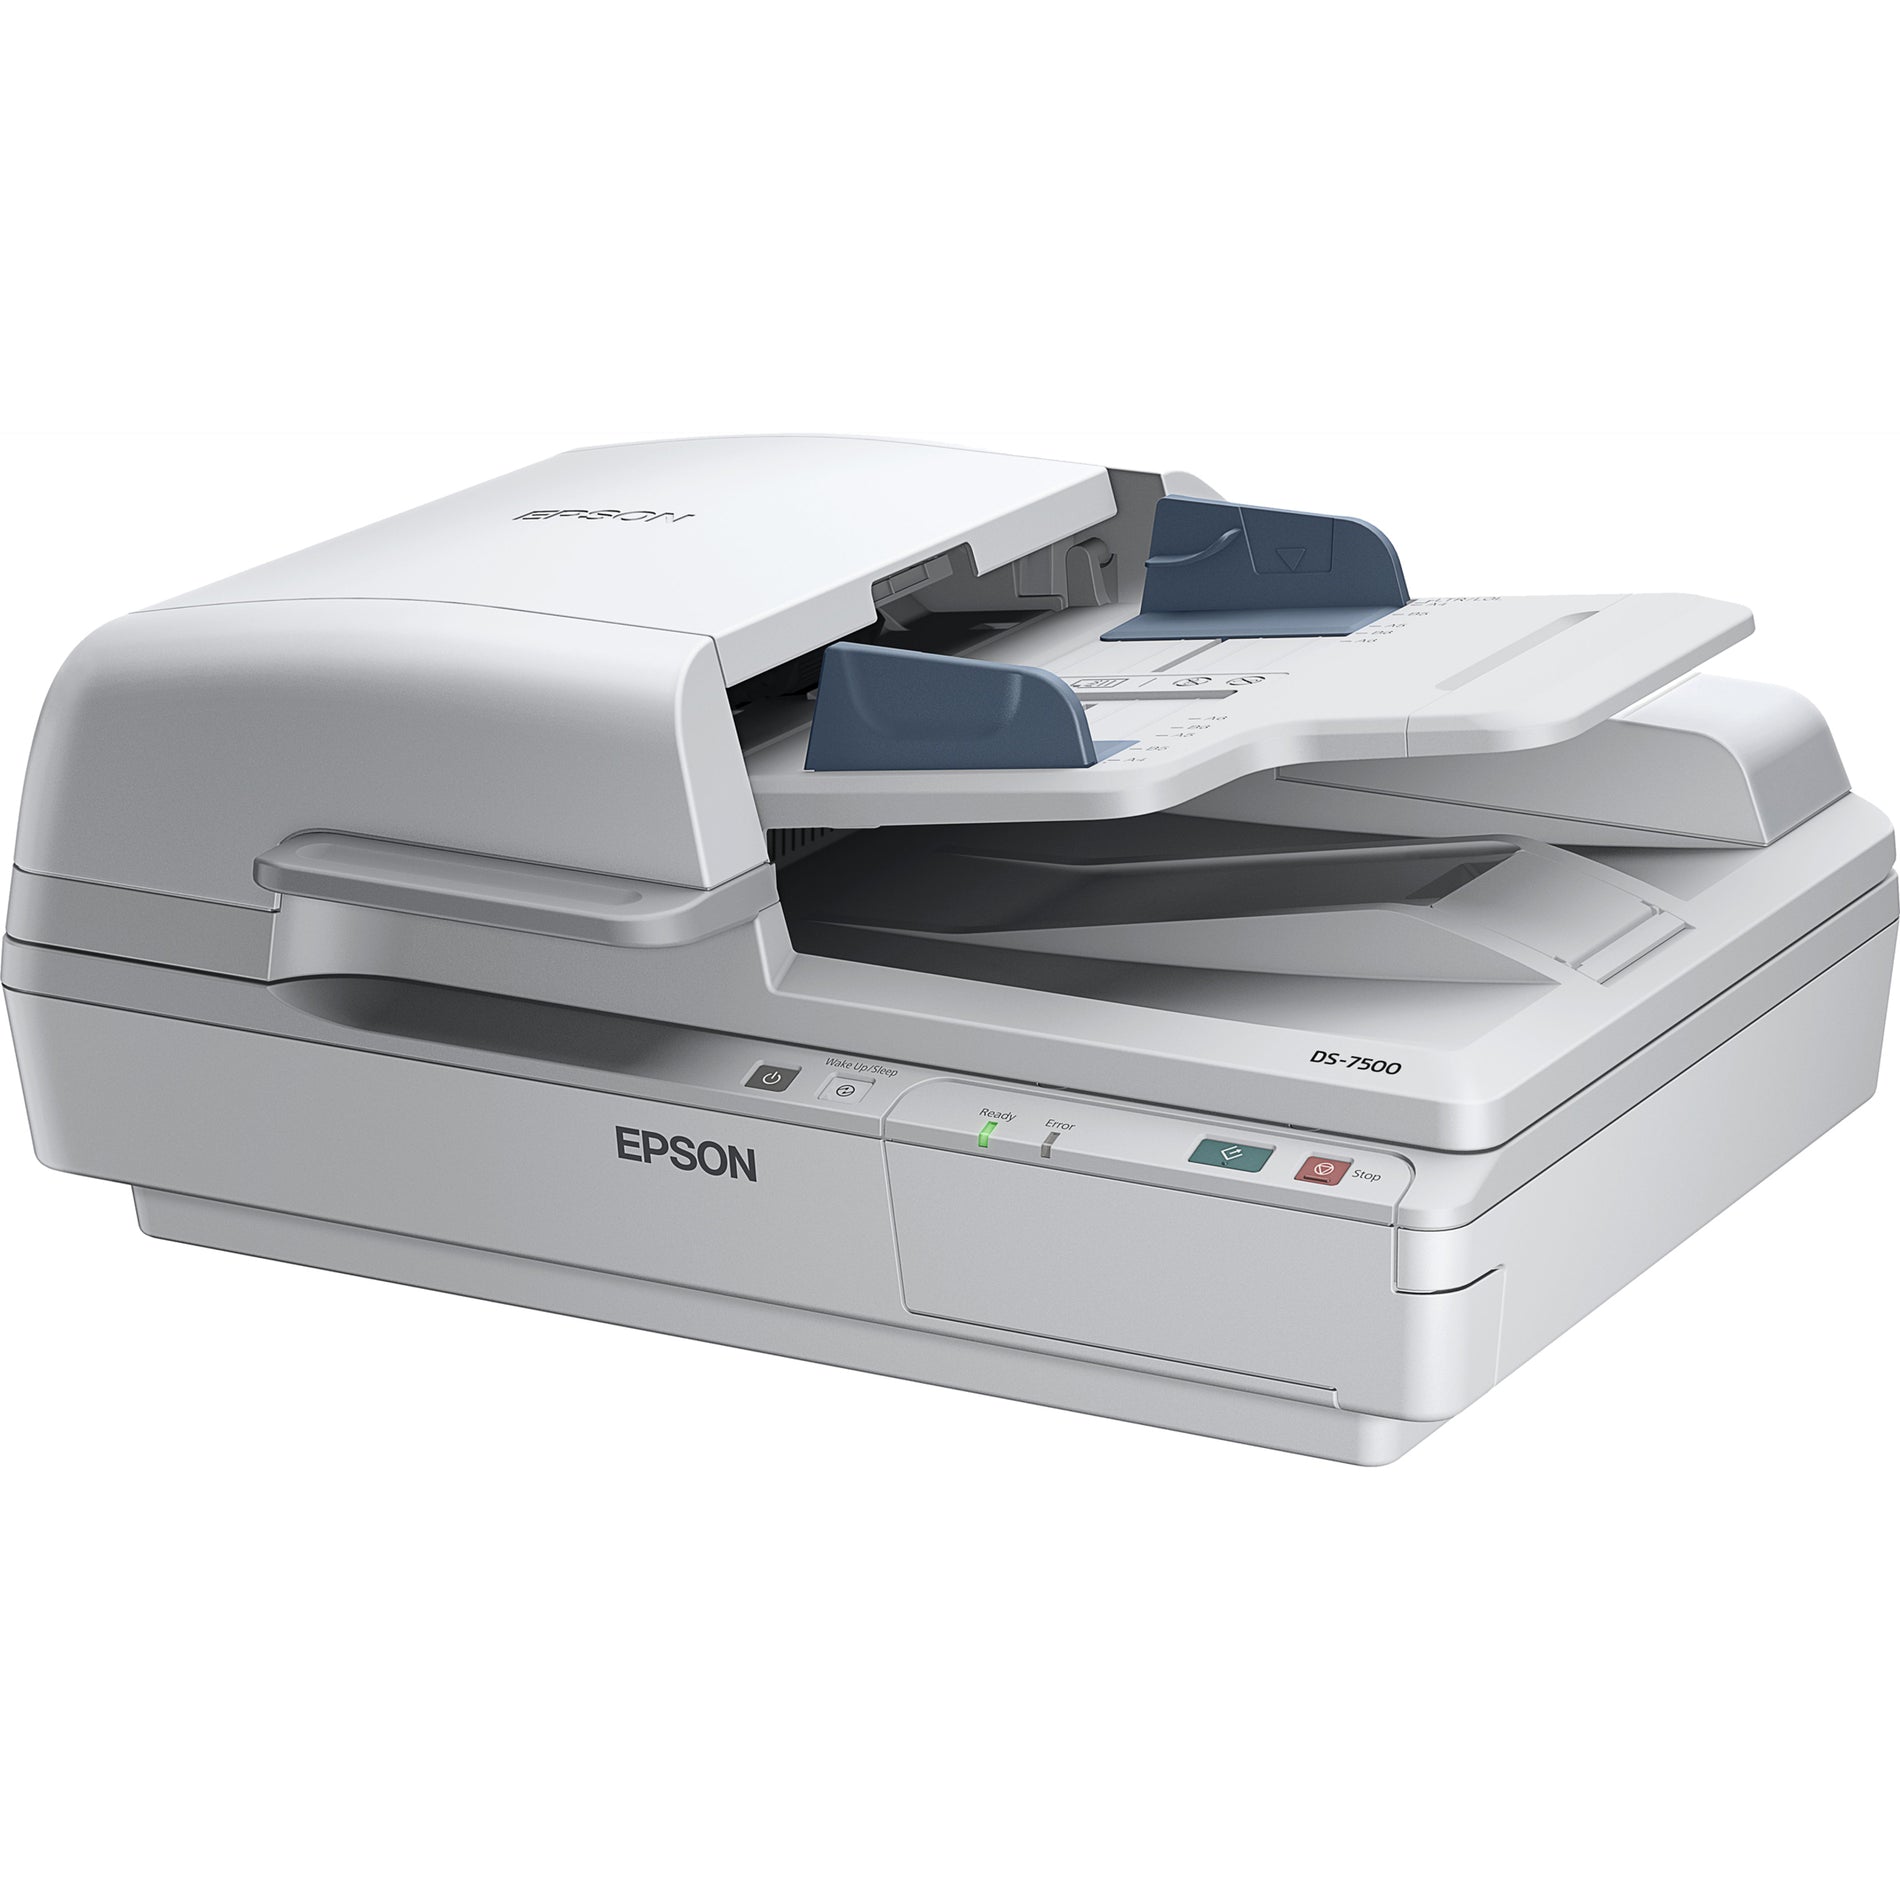 Epson B11B205321 WorkForce DS-7500 Document Scanner, Color, 1200 DPI, ADF Duplex Scanning